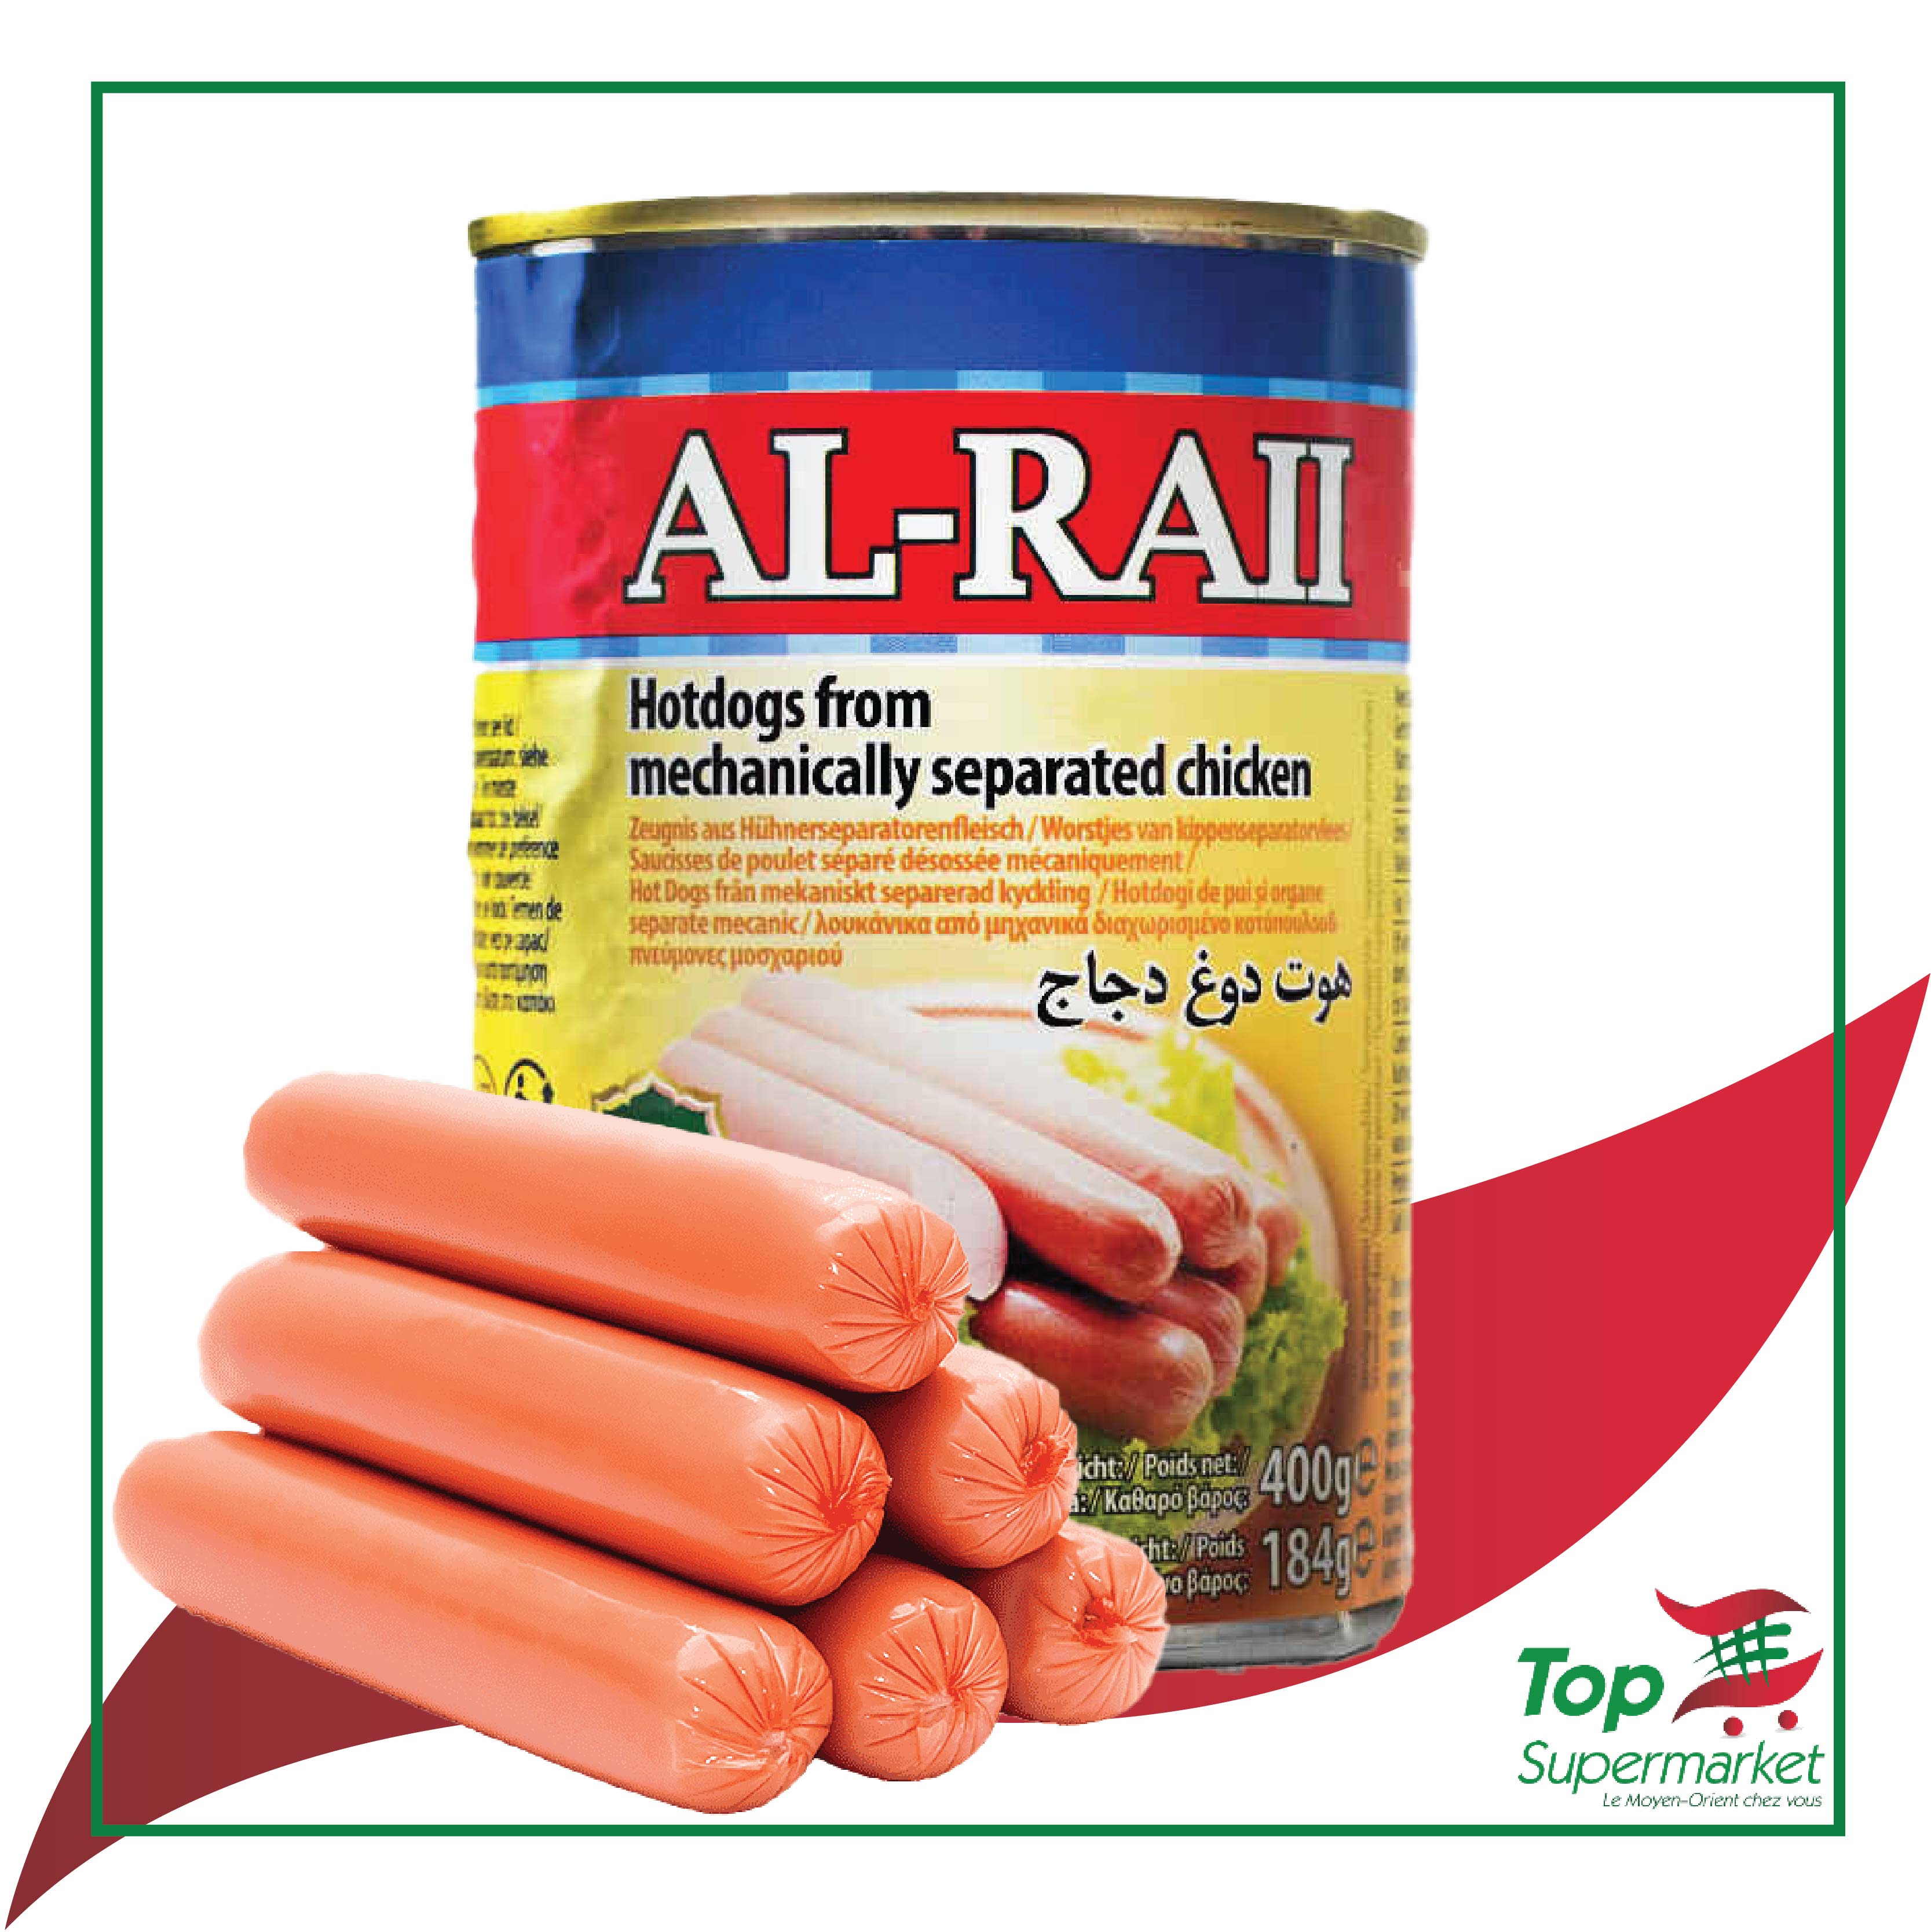 Al-Raii Hotdogs Poulet 400gr HALAL